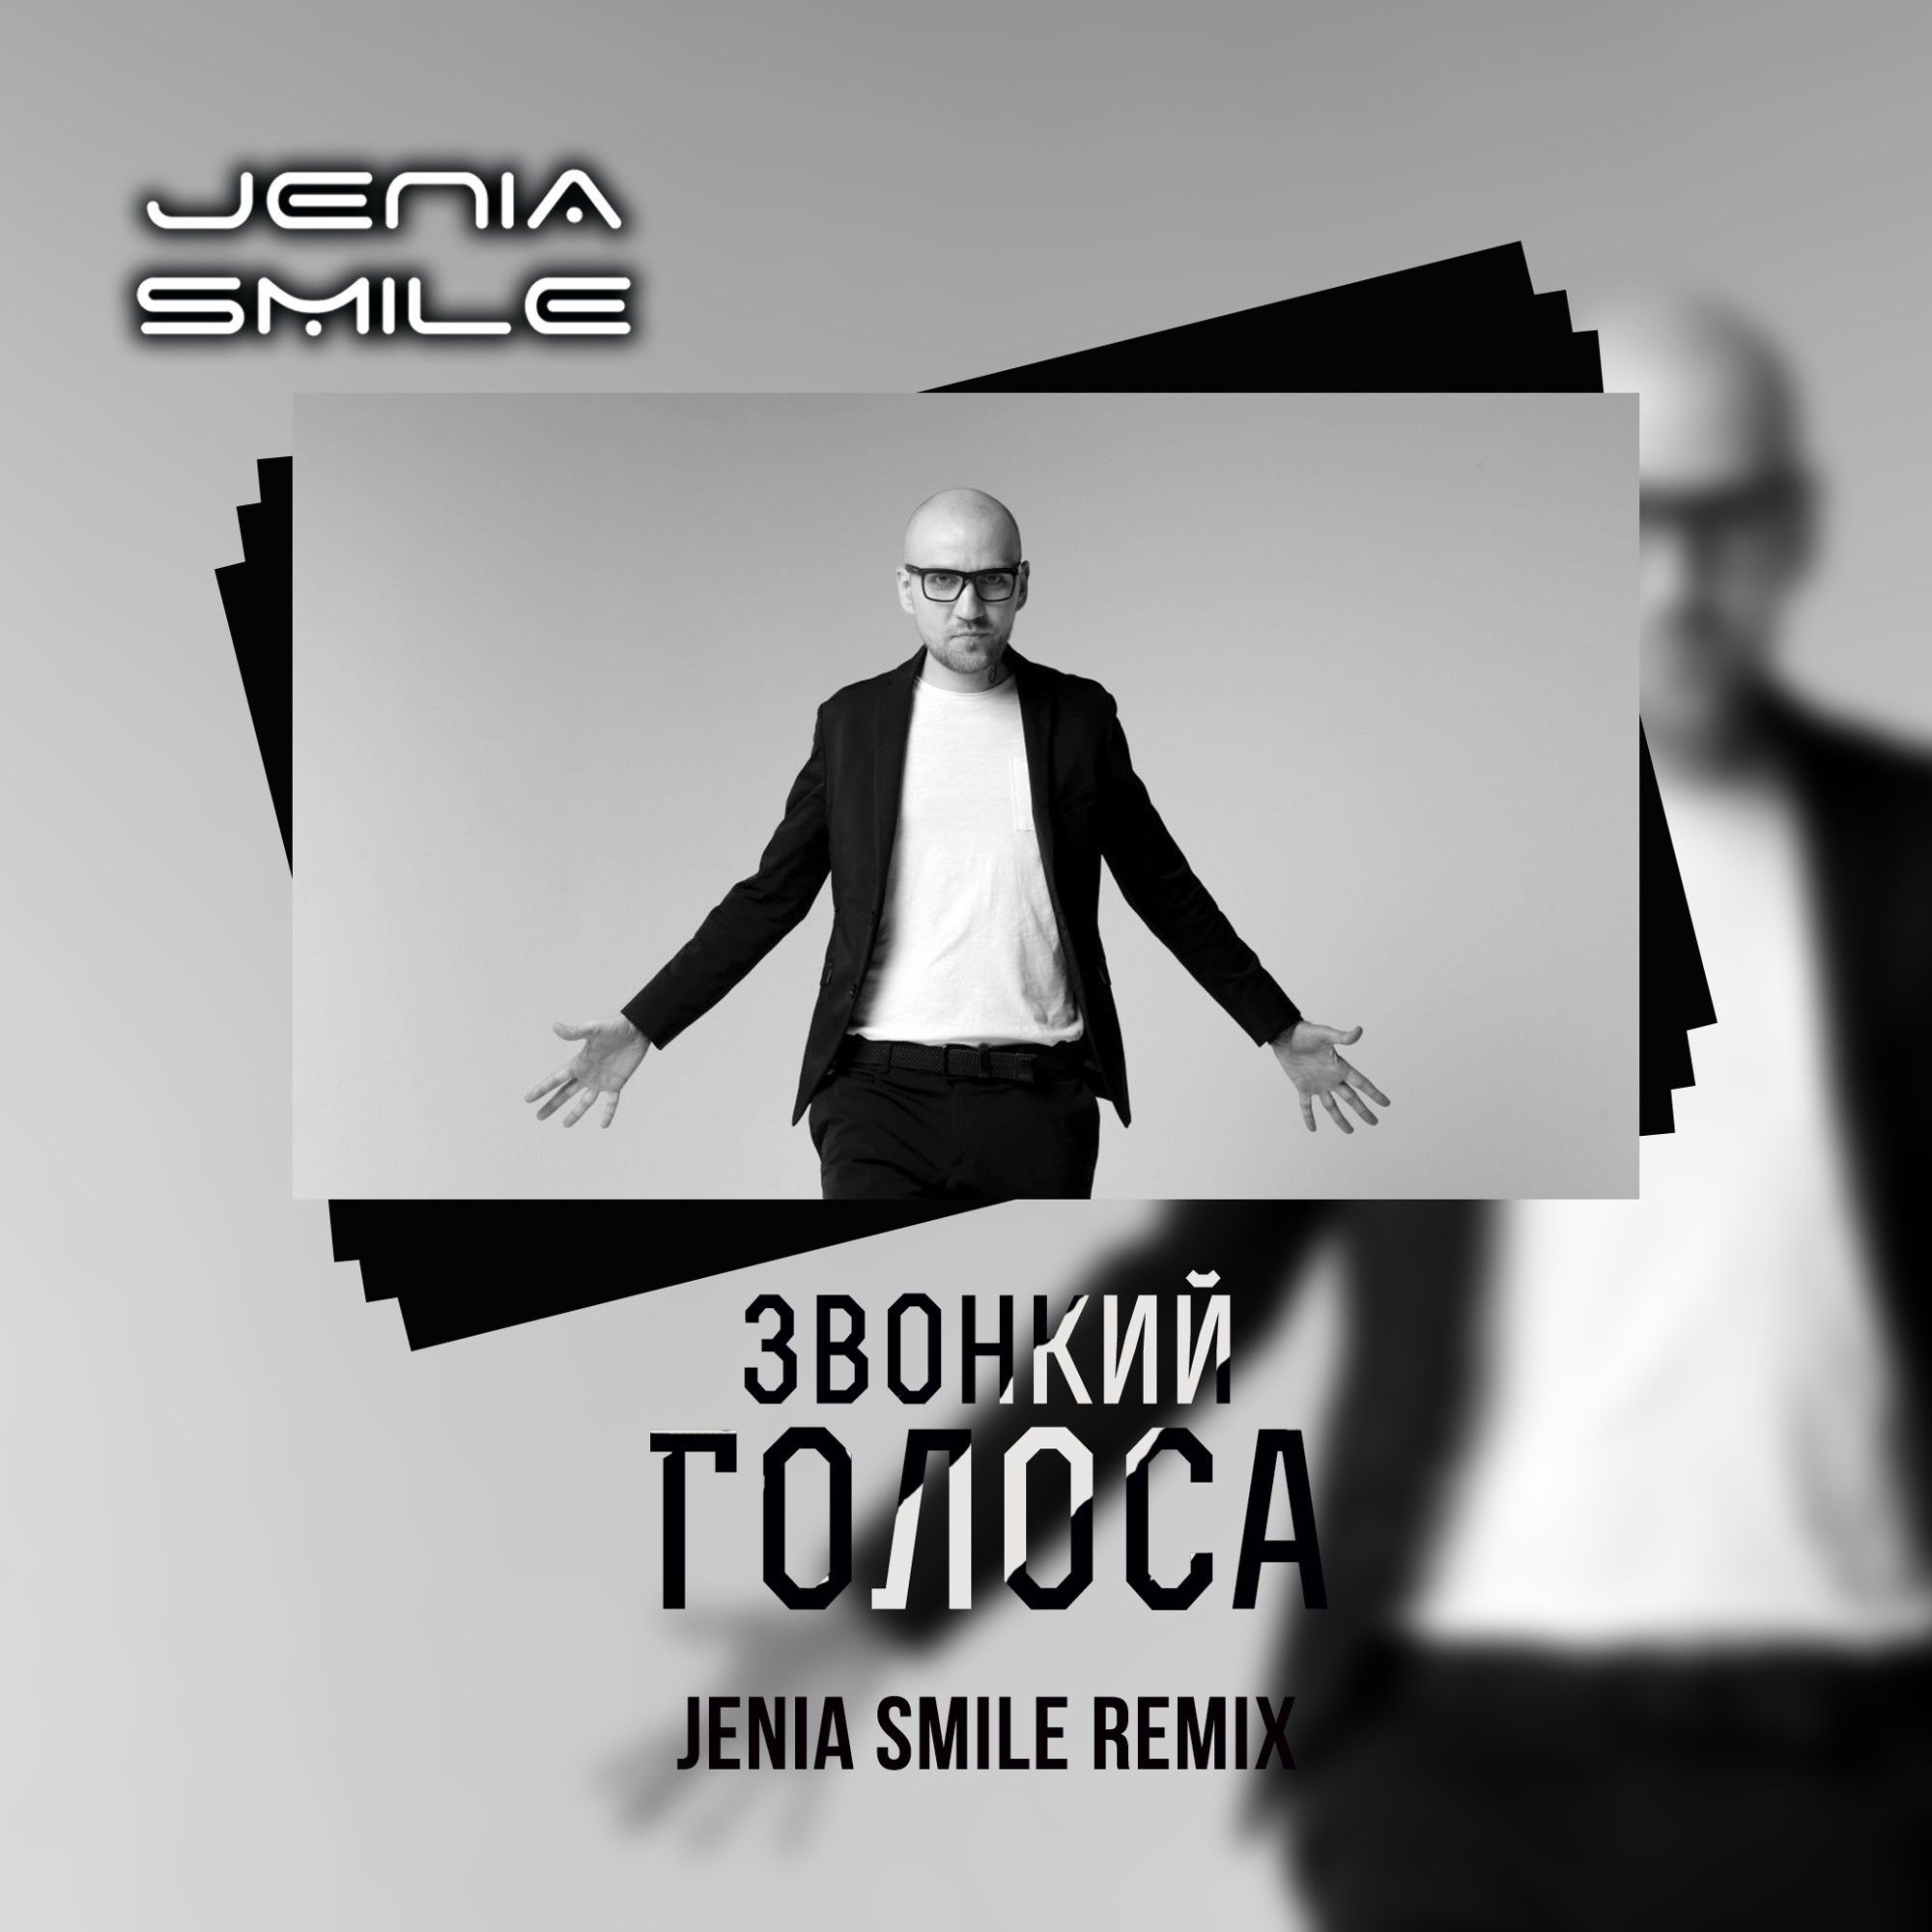 Послушать звонкого. Звонкий голоса. Jenia smile. Smile ремикс. Звонкий голоса ремикс.